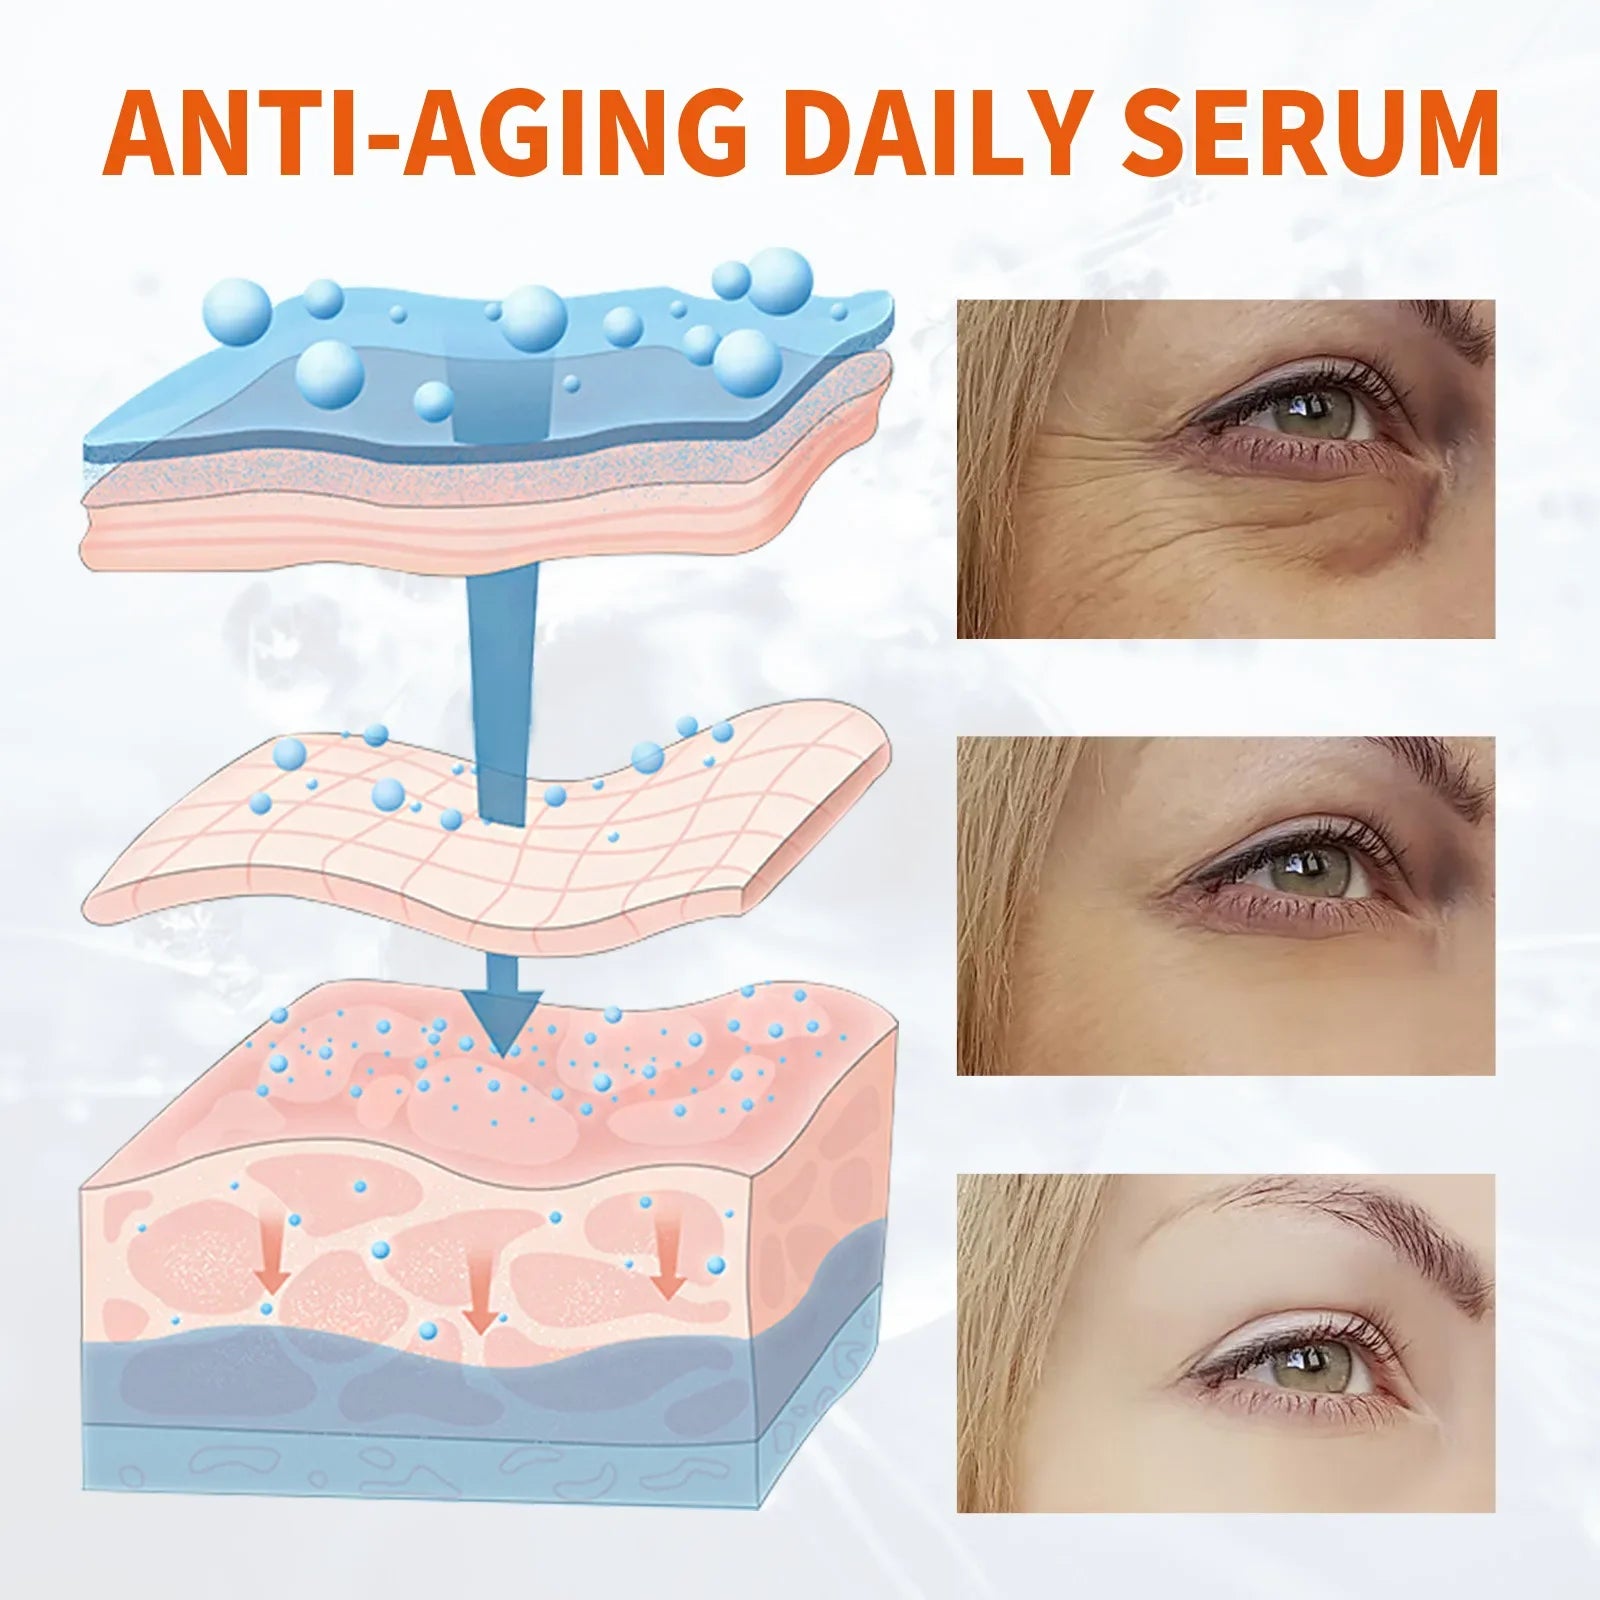 Collagen Boost Face Serum Anti Aging Dark Spot Corrector Wrinkles Removal Tightening Lifting Brightening Hydrating Essence 30ml